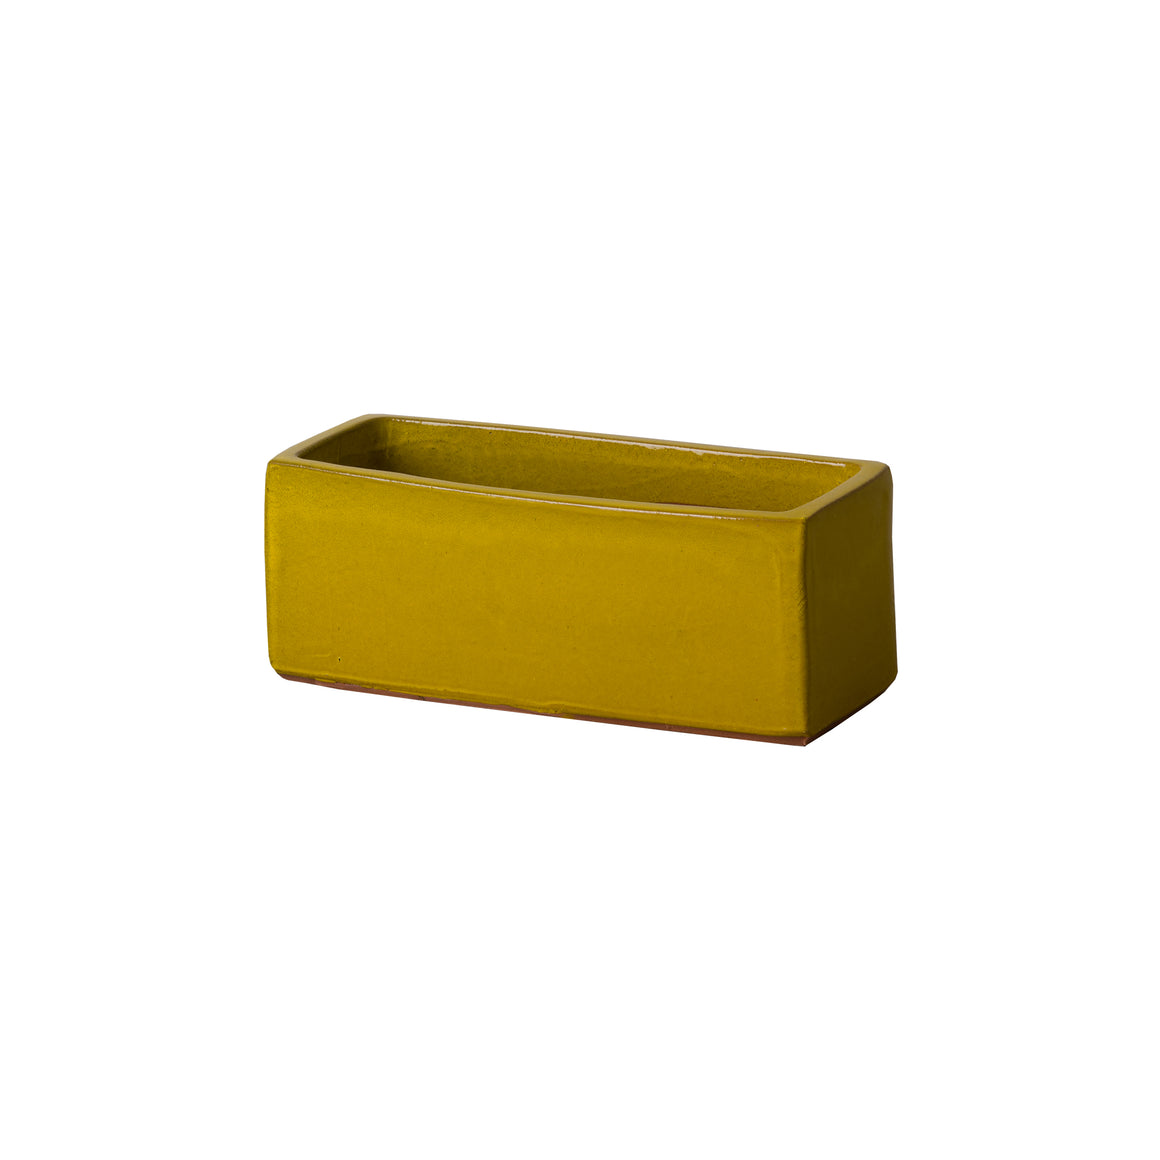 Small Window Box Planter with a Mustard Yellow Glaze